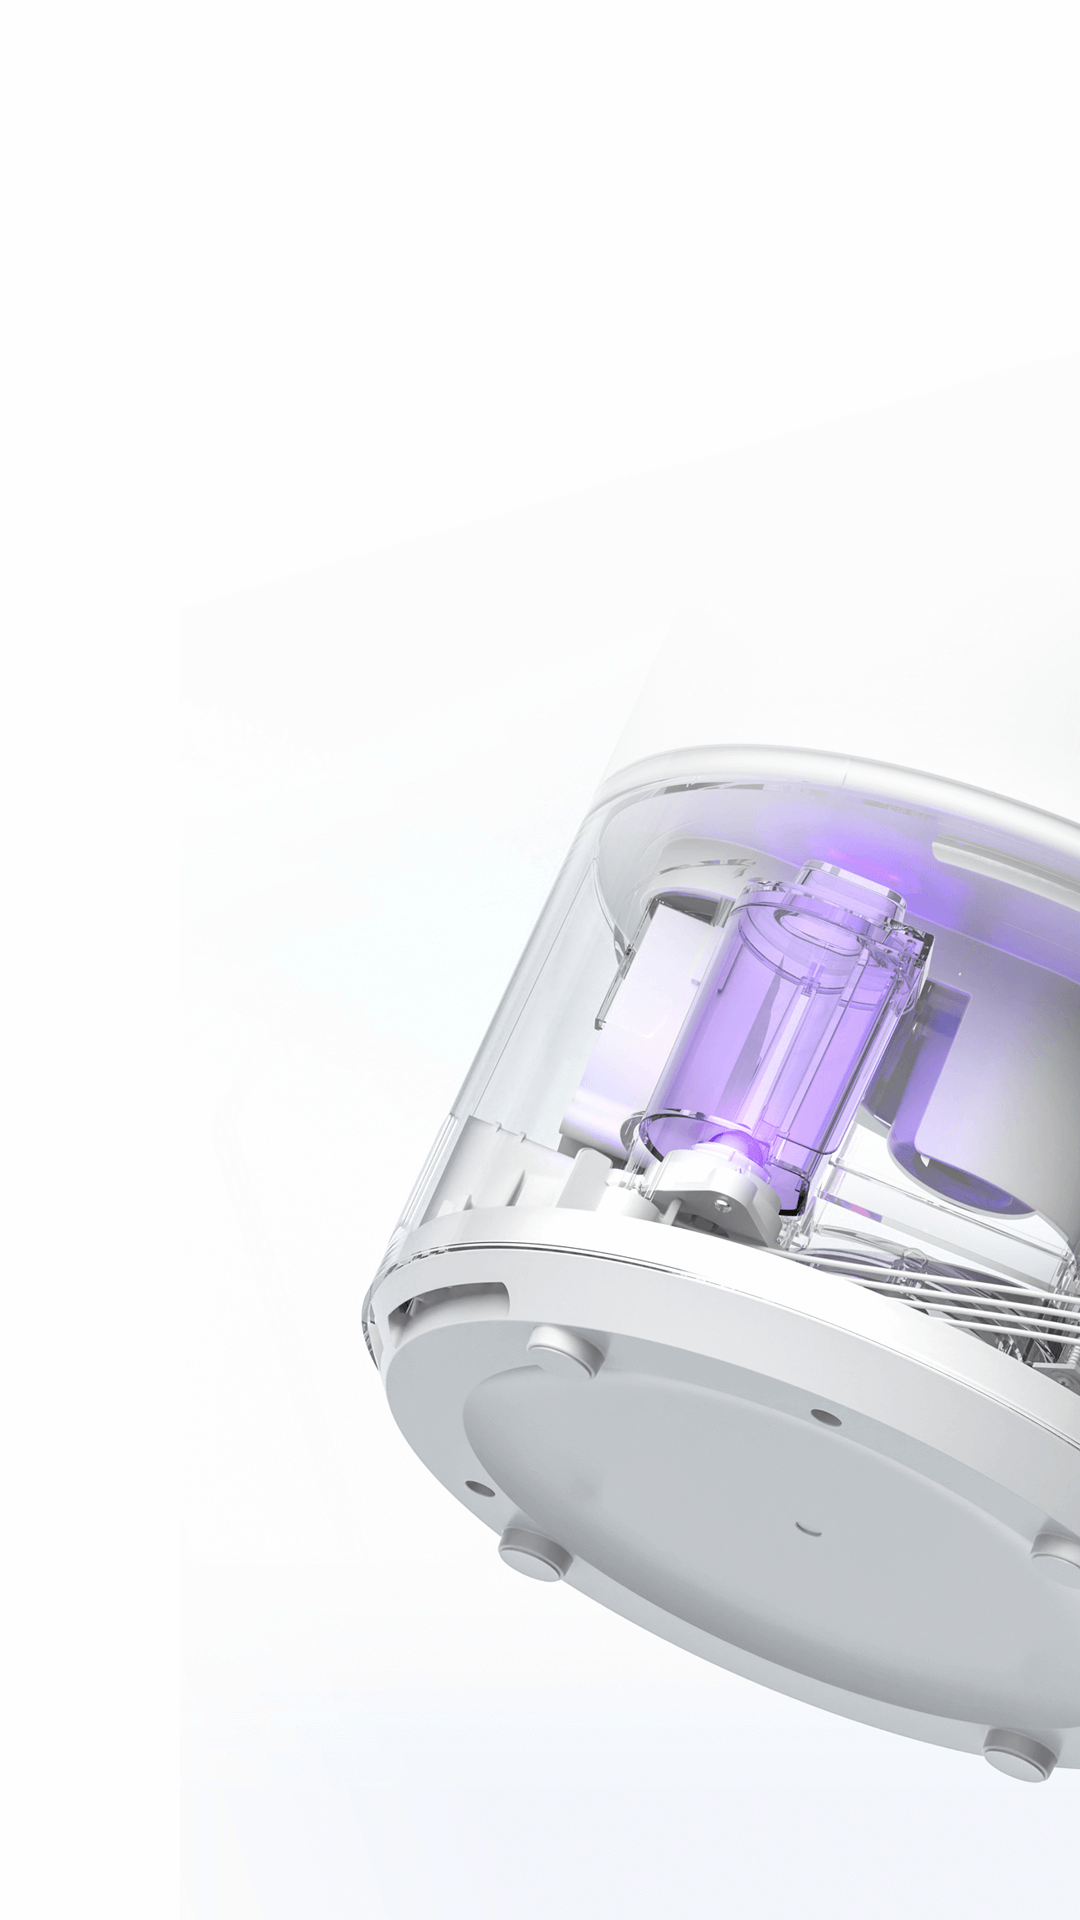 Xiaomi Smart Humidifier 2 - UV-C sterilisation | Xiaomi Global